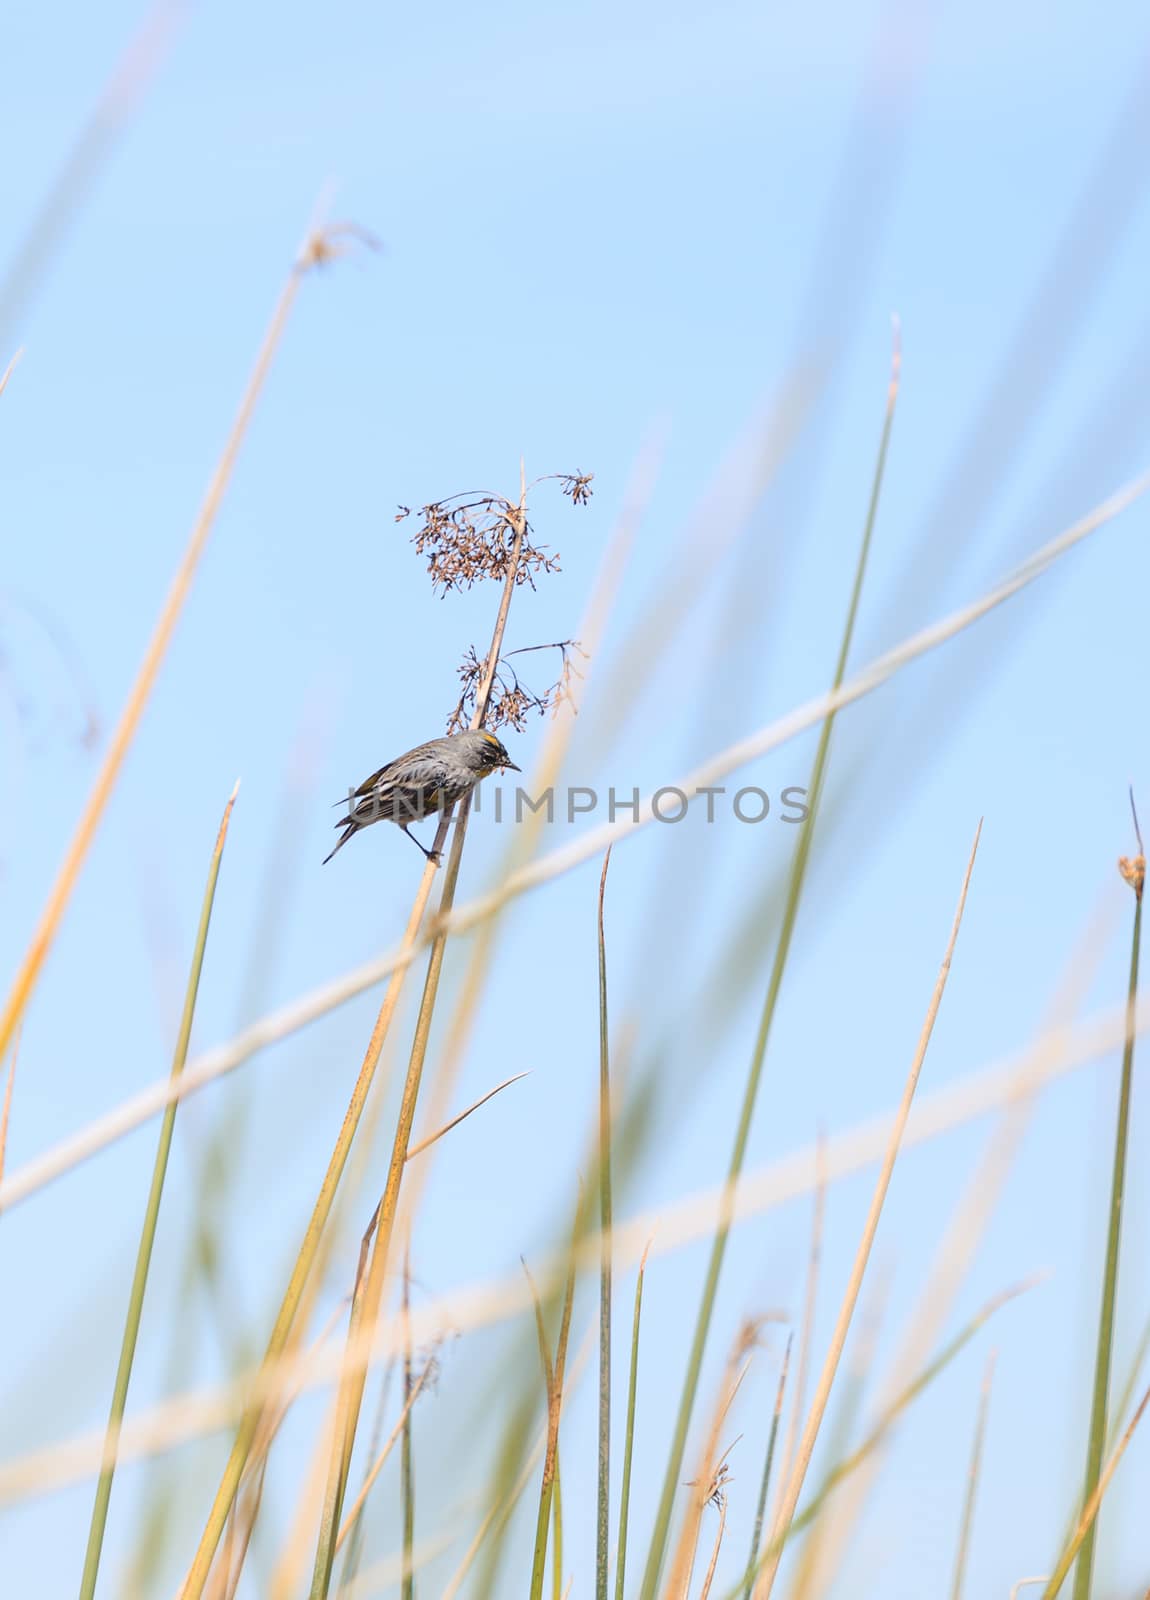 Yellow-rumped warbler, Setophaga coronata, hides among the reeds at the San Joaquin wildlife sanctuary.